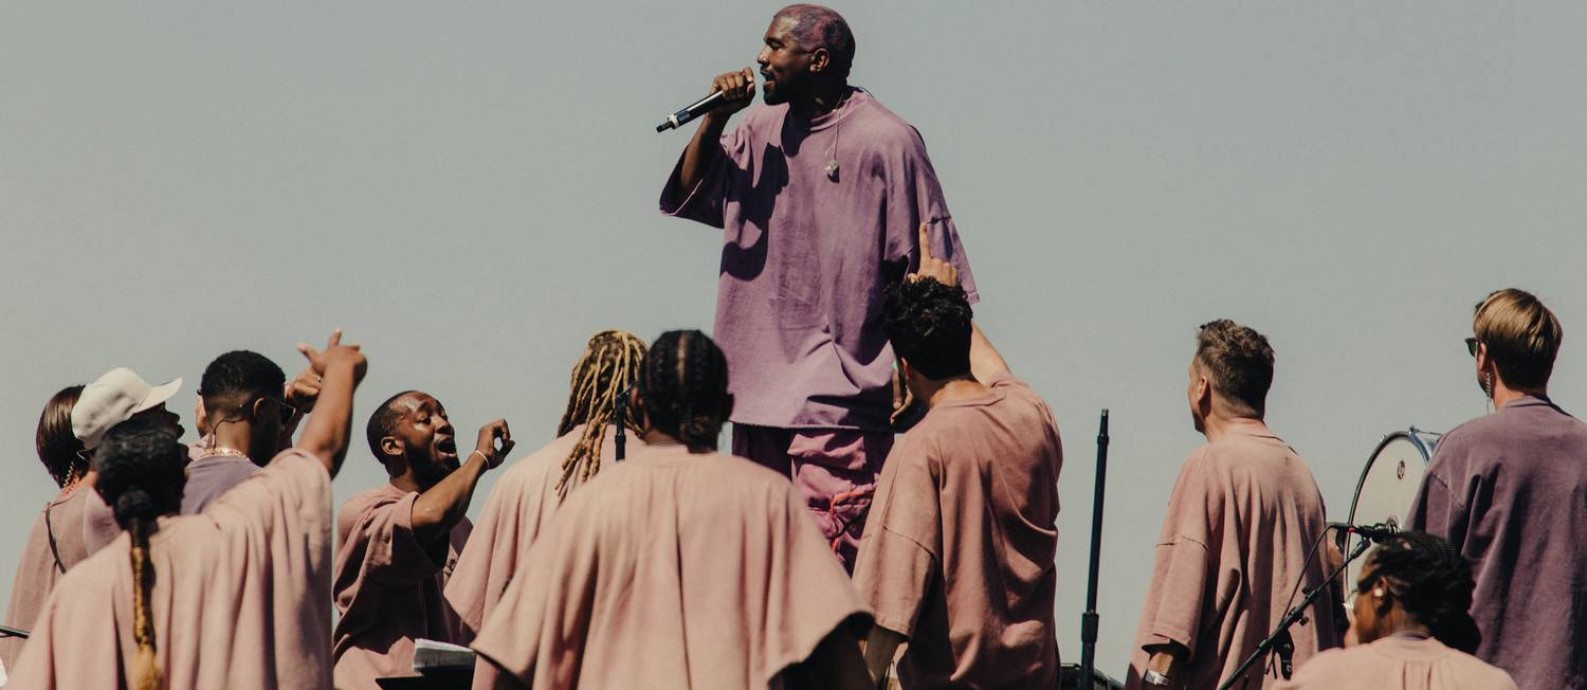 Kanye West lidera seu culto musical 'Sunday Service' no festival Coachella, em abril Foto: ROZETTE RAGO / NYT